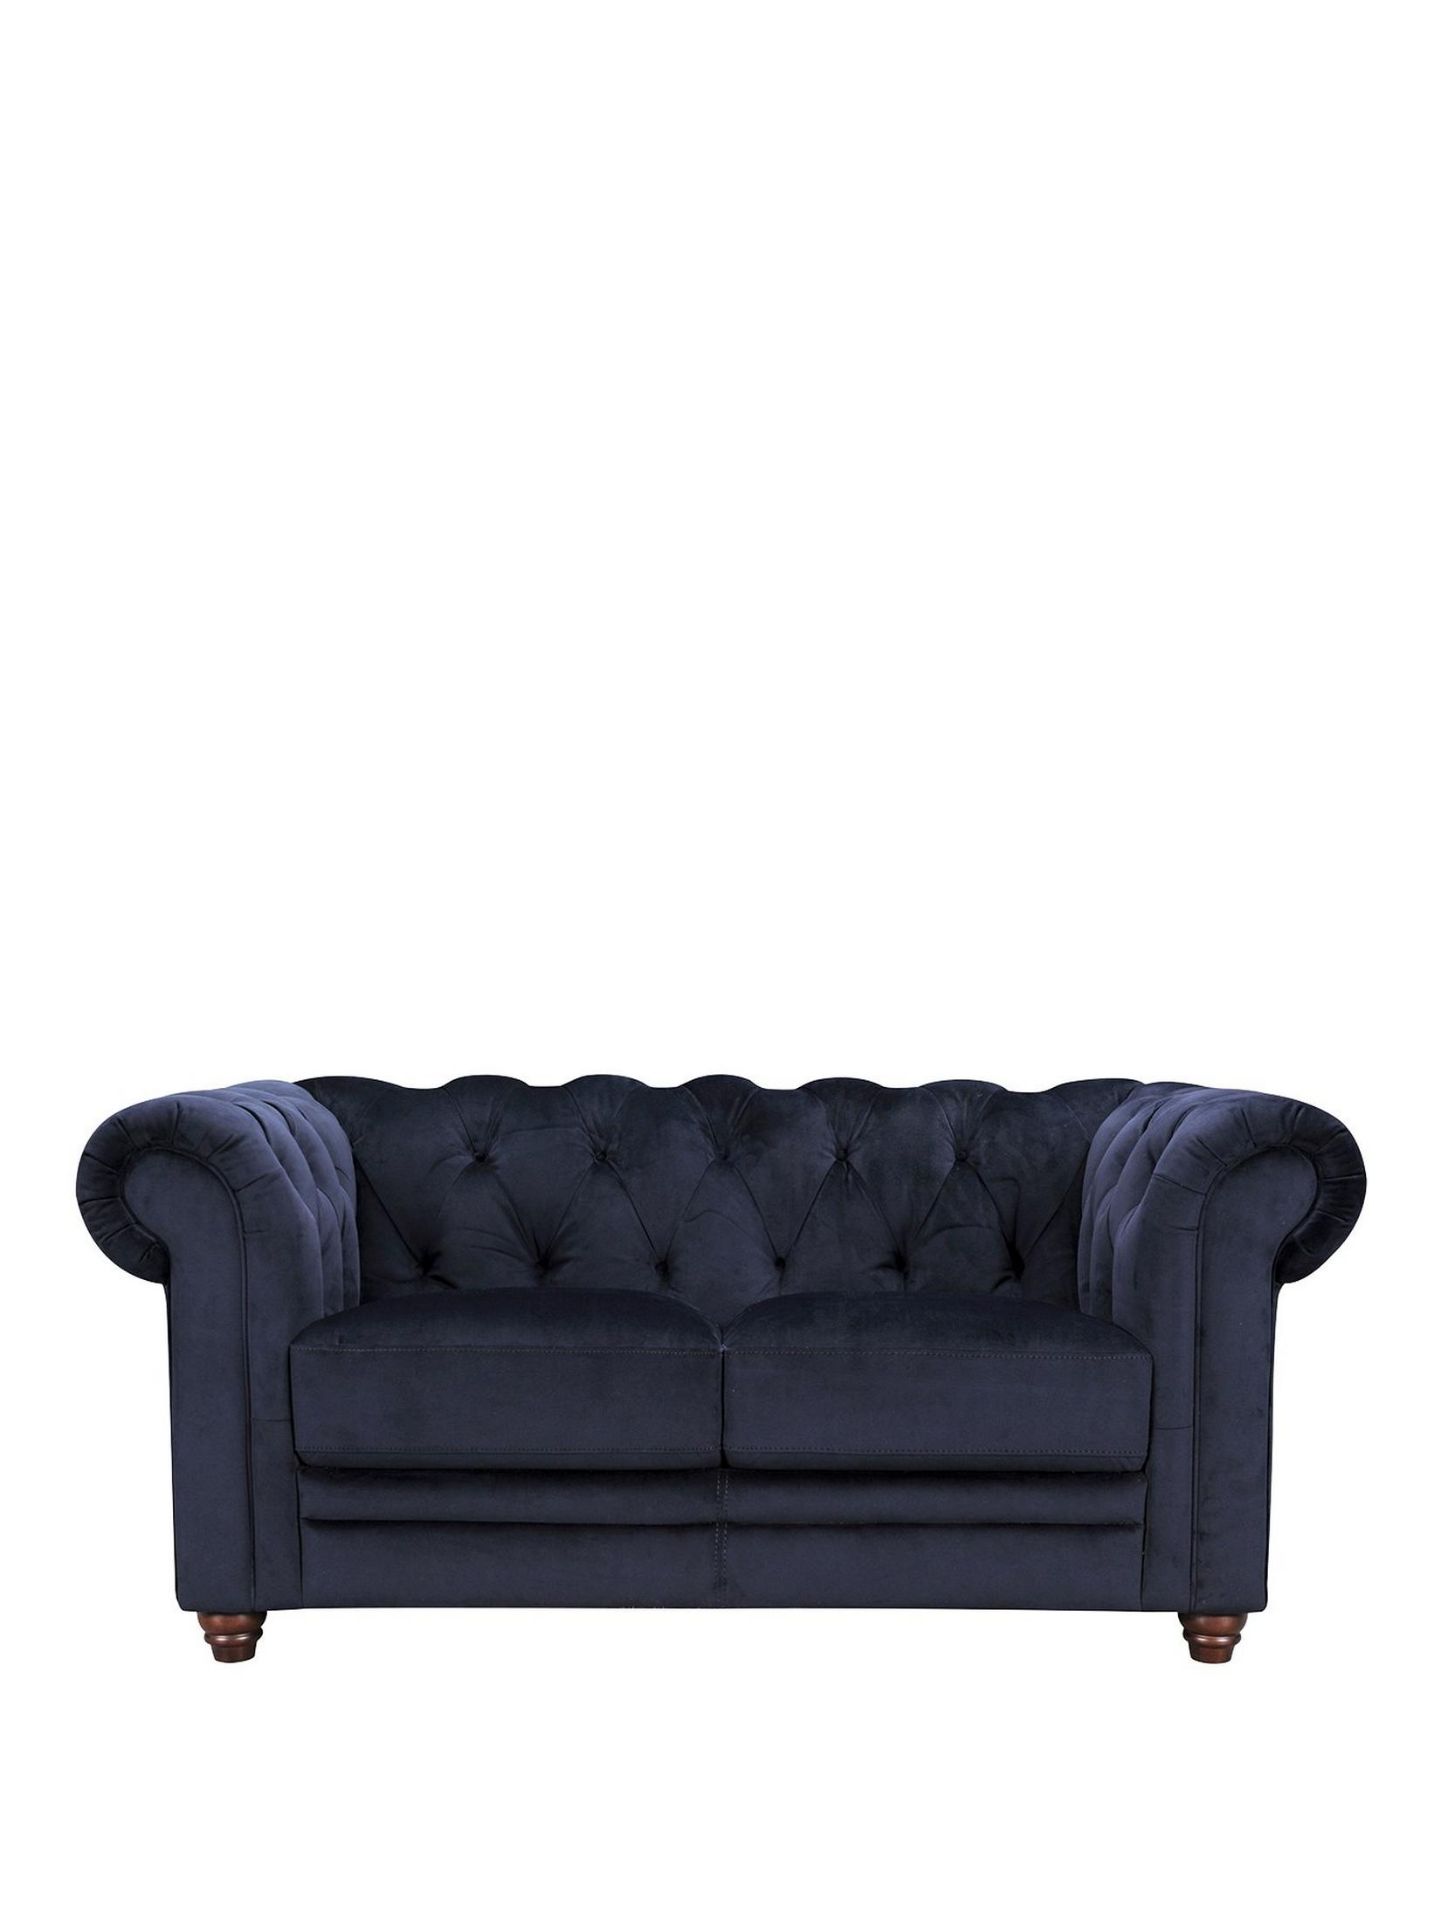 Cheltenham 2 Seater Sofa. RPP £1,519.00. H 74 x W 164 x D 97cm Iconic silhouette Reflecting